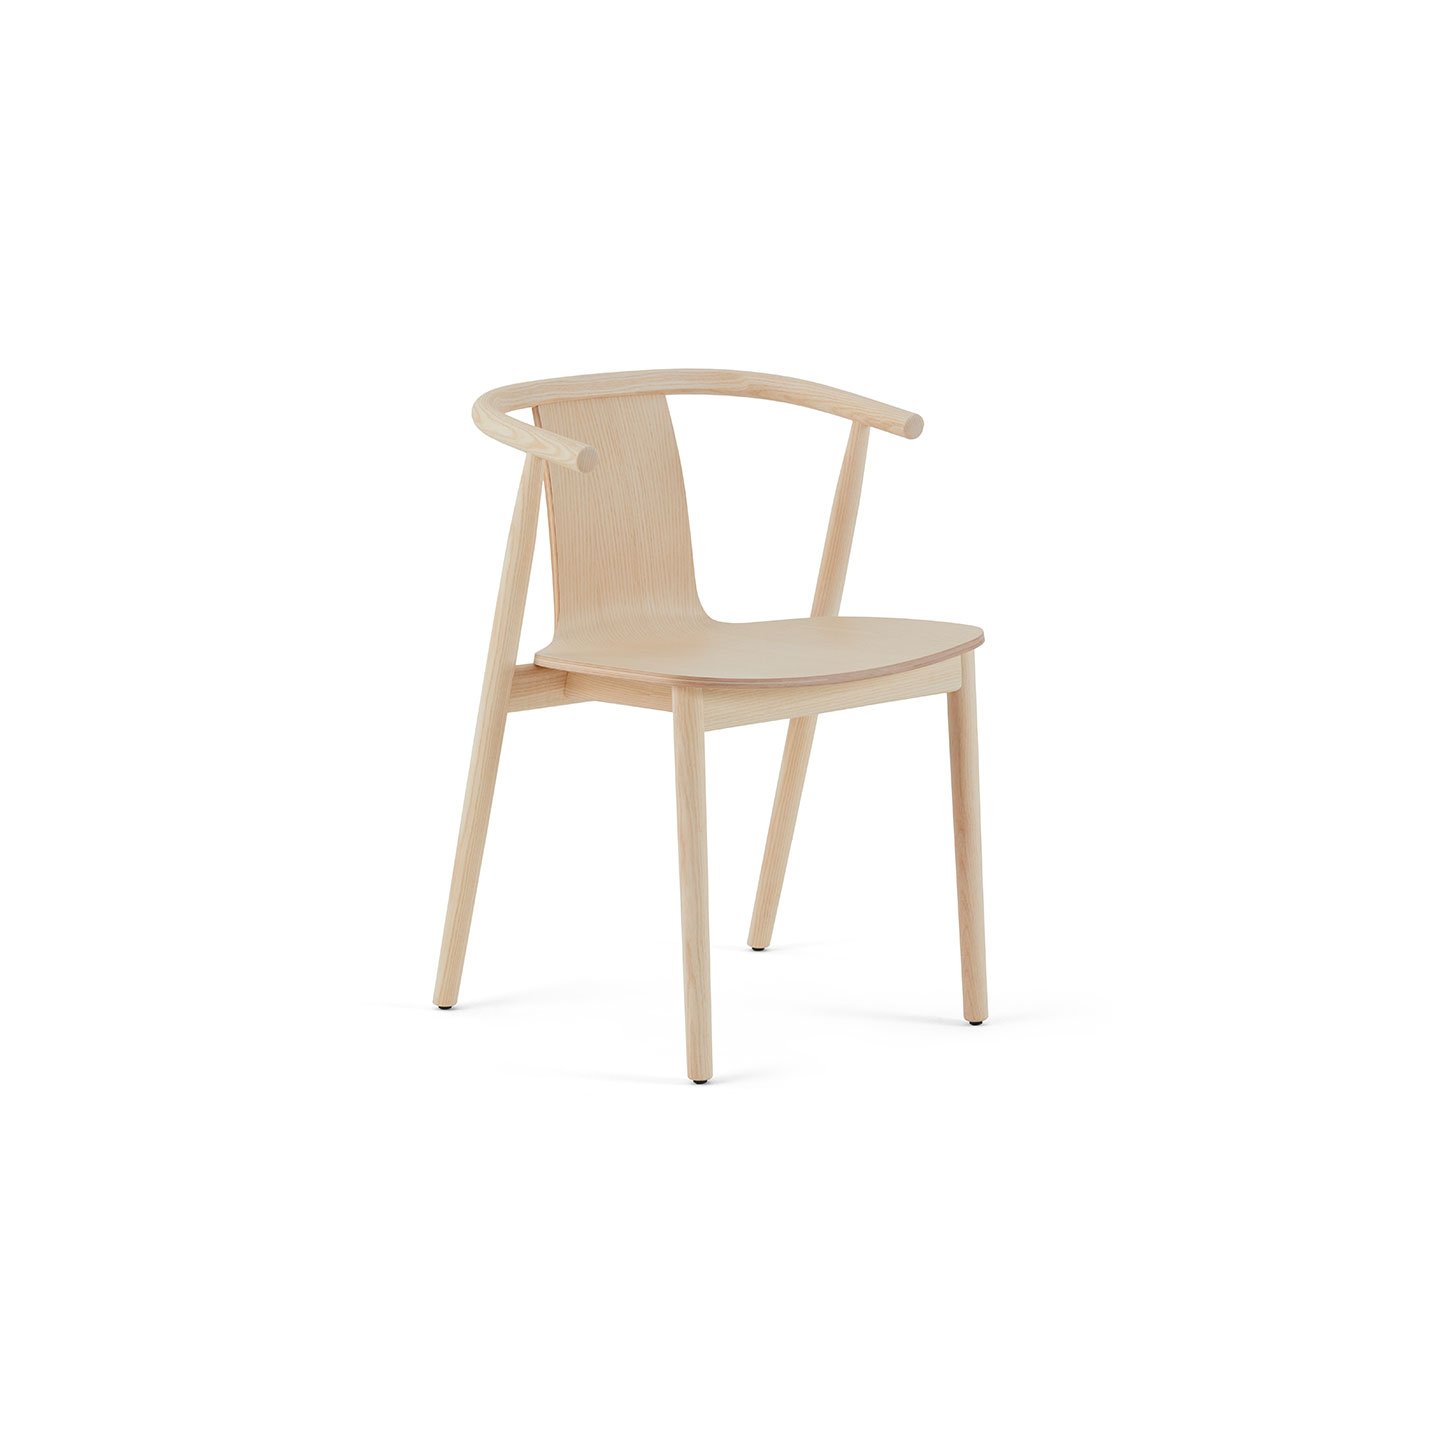 Haworth Bac chair in light brown wood